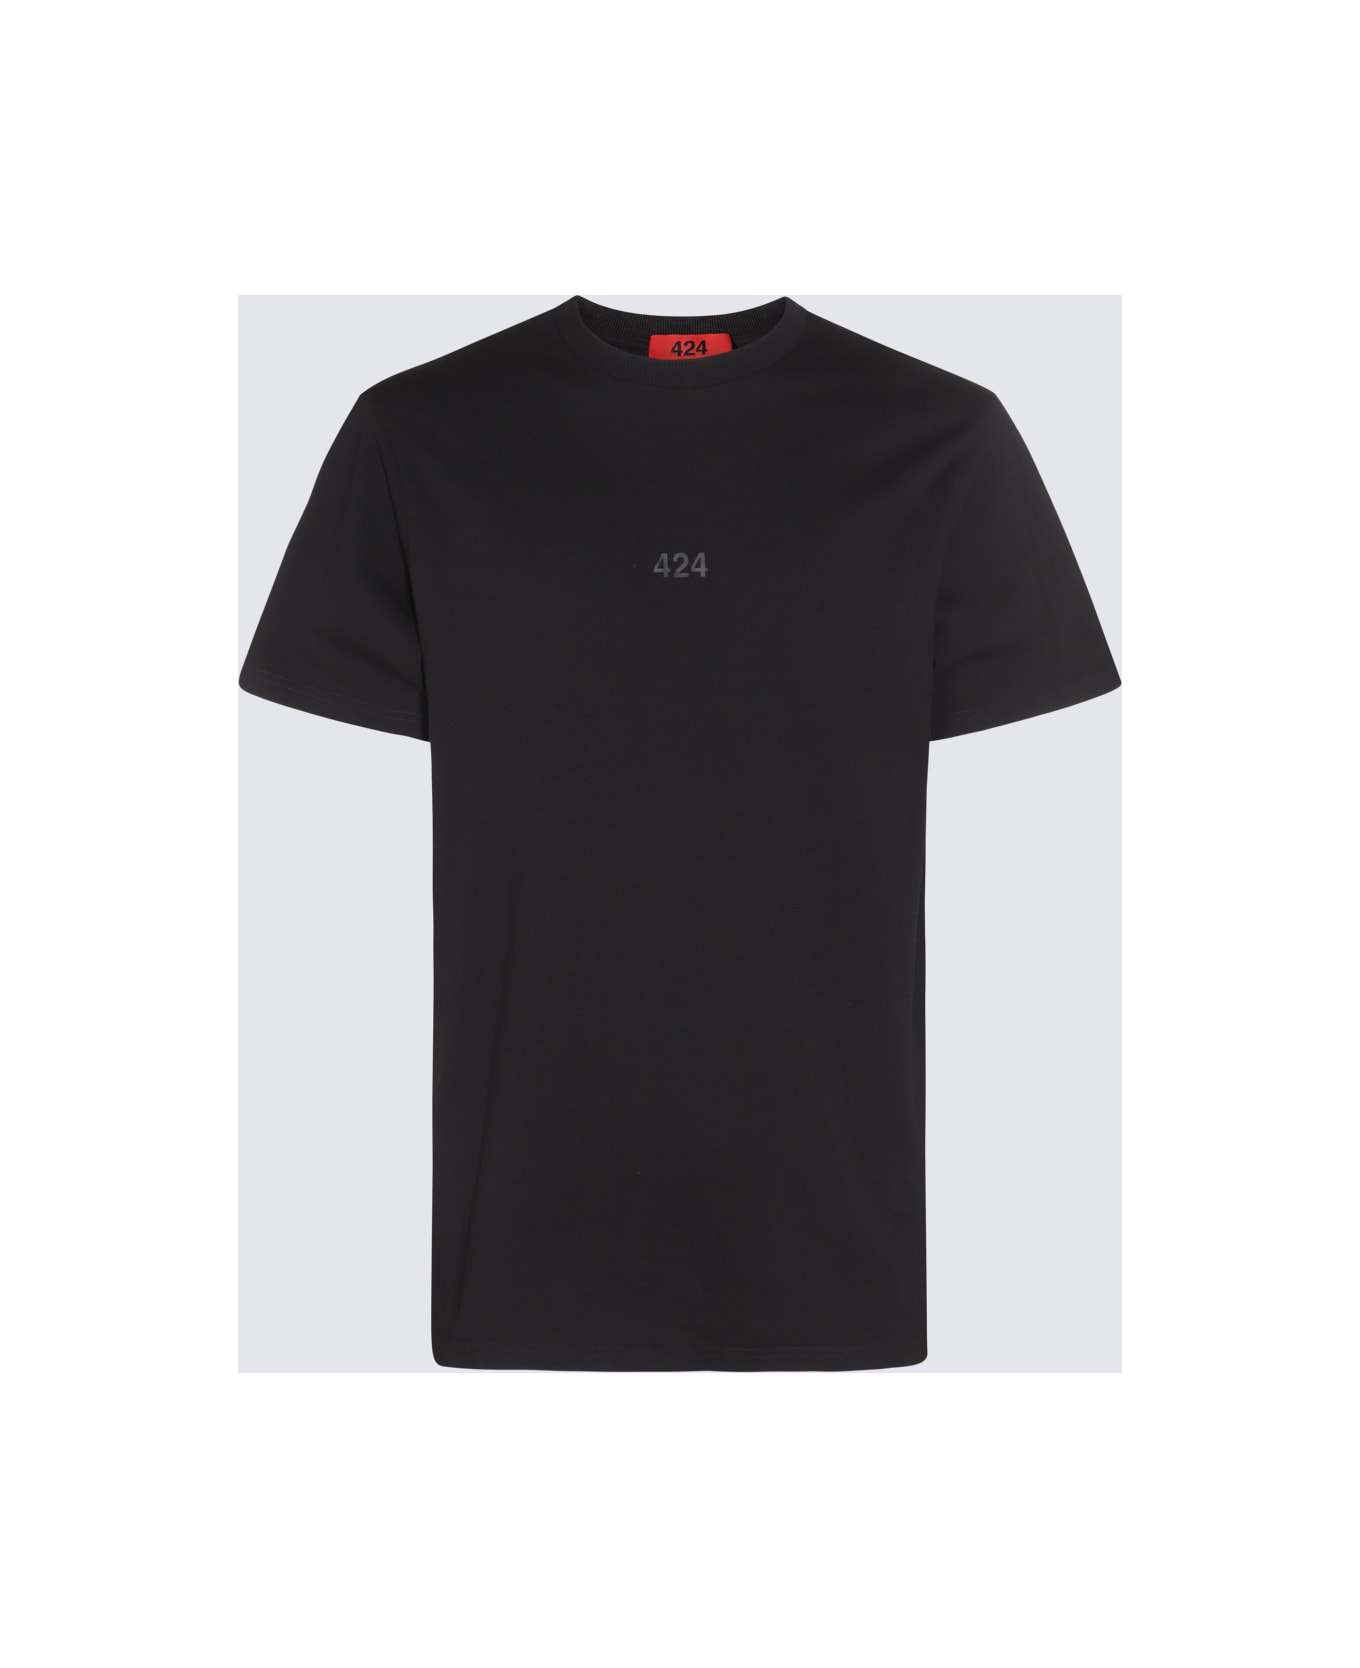 FourTwoFour on Fairfax Black Cotton T-shirt - Black